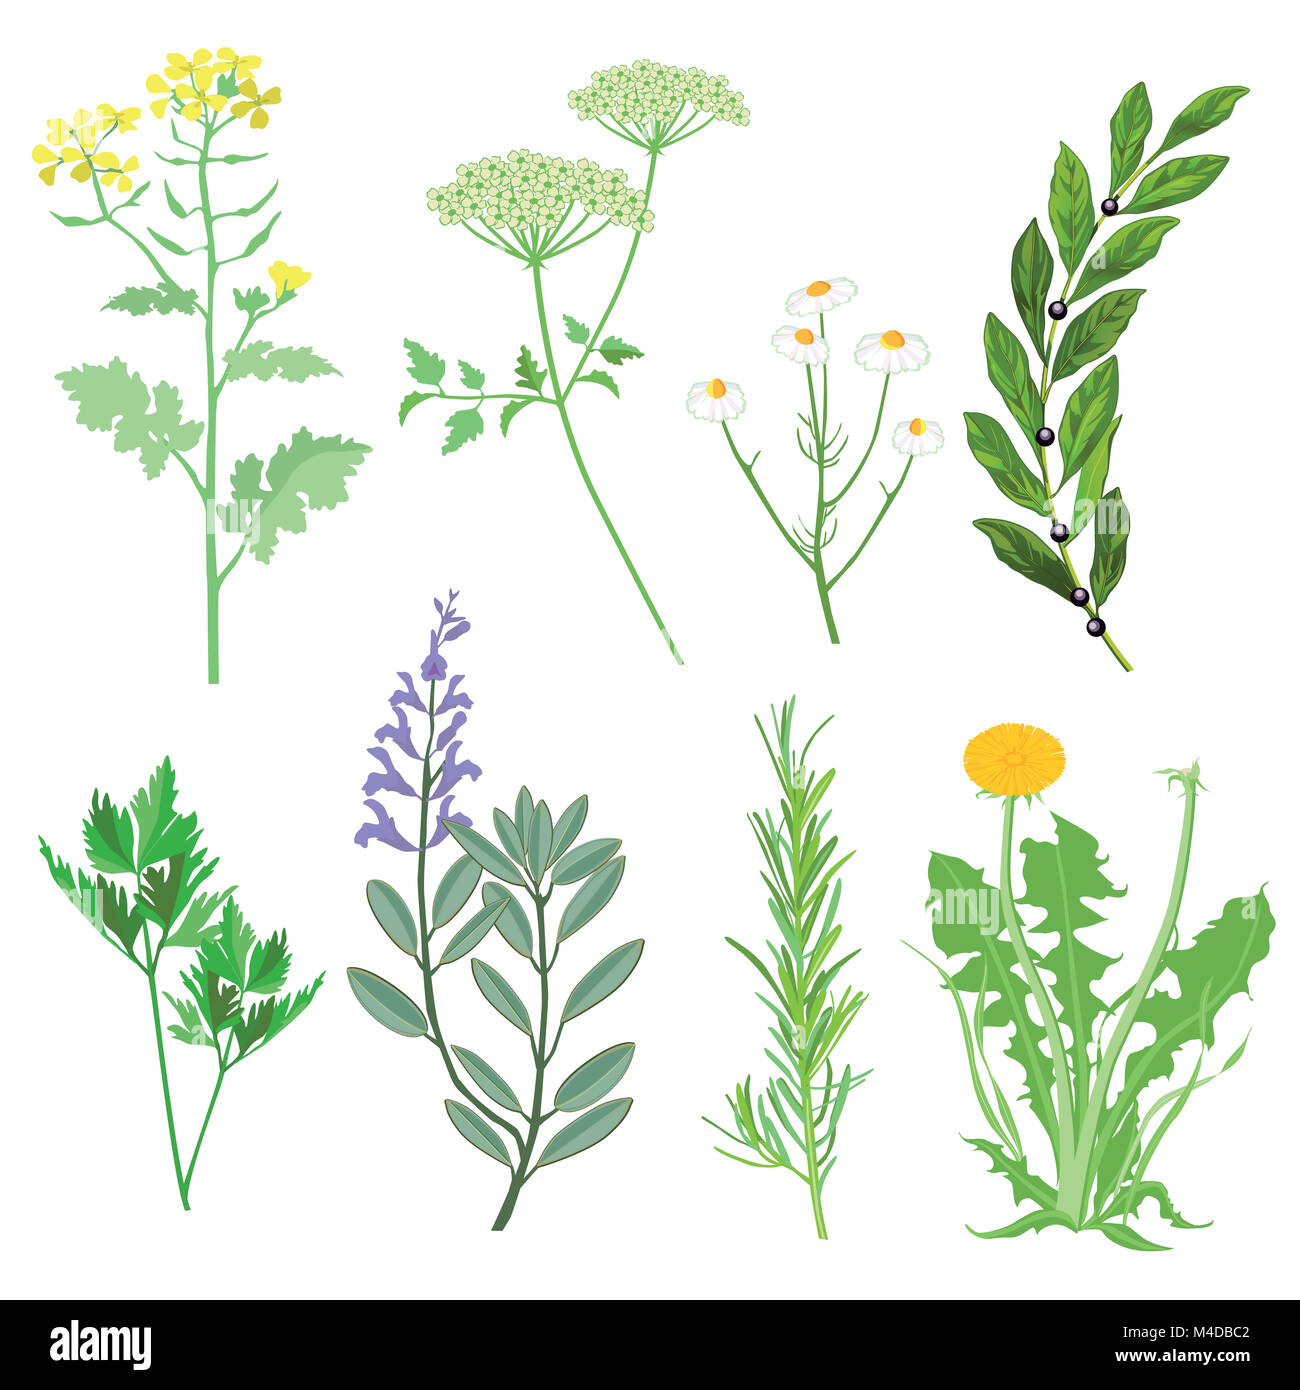 Herbs and medicinal plants. Botanical Illustration Stock Photo